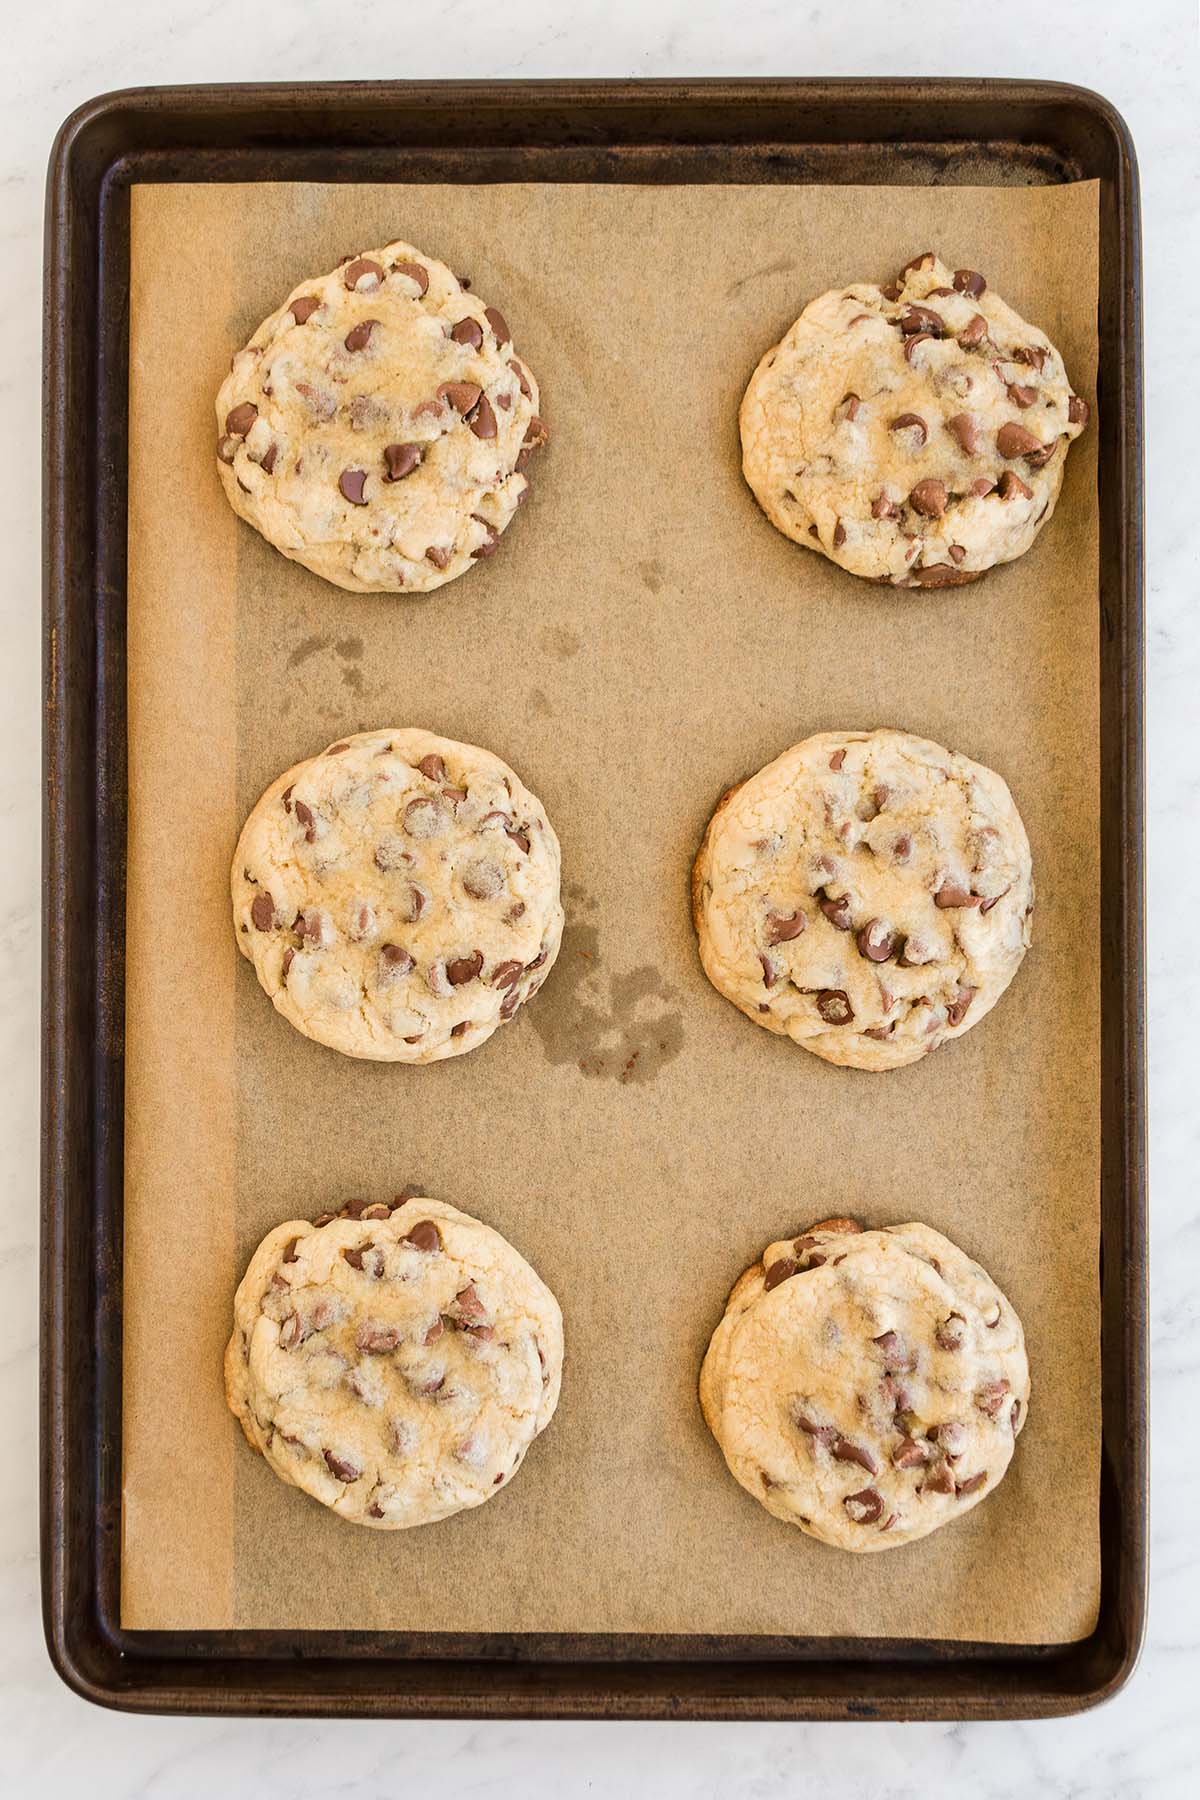 Six cookies on a baking sheet